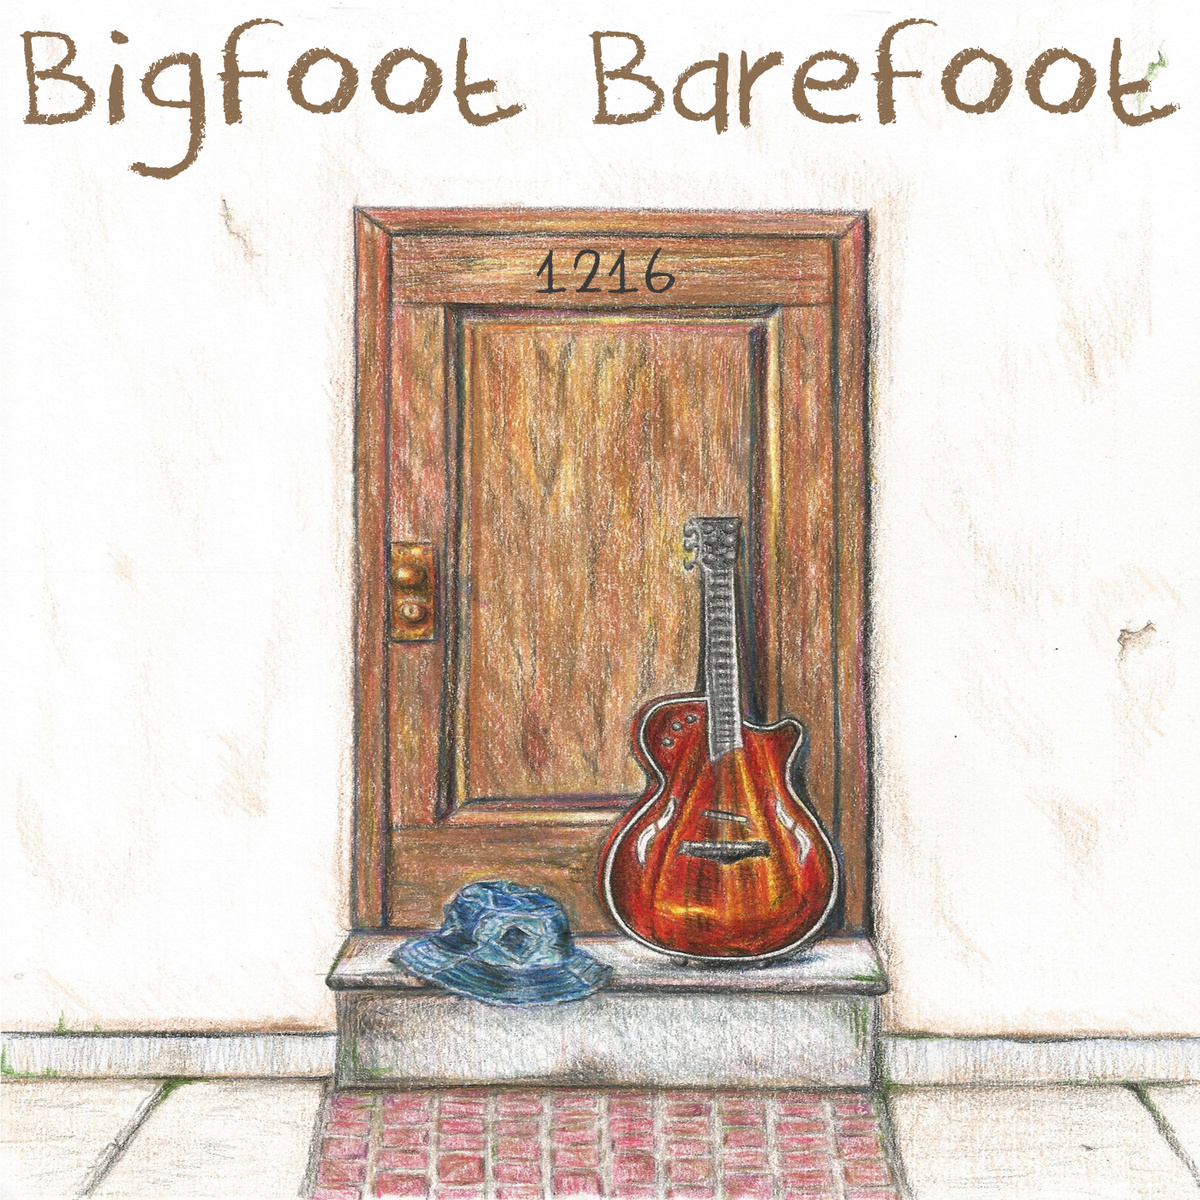  Bigfoot Barefoot – 1216